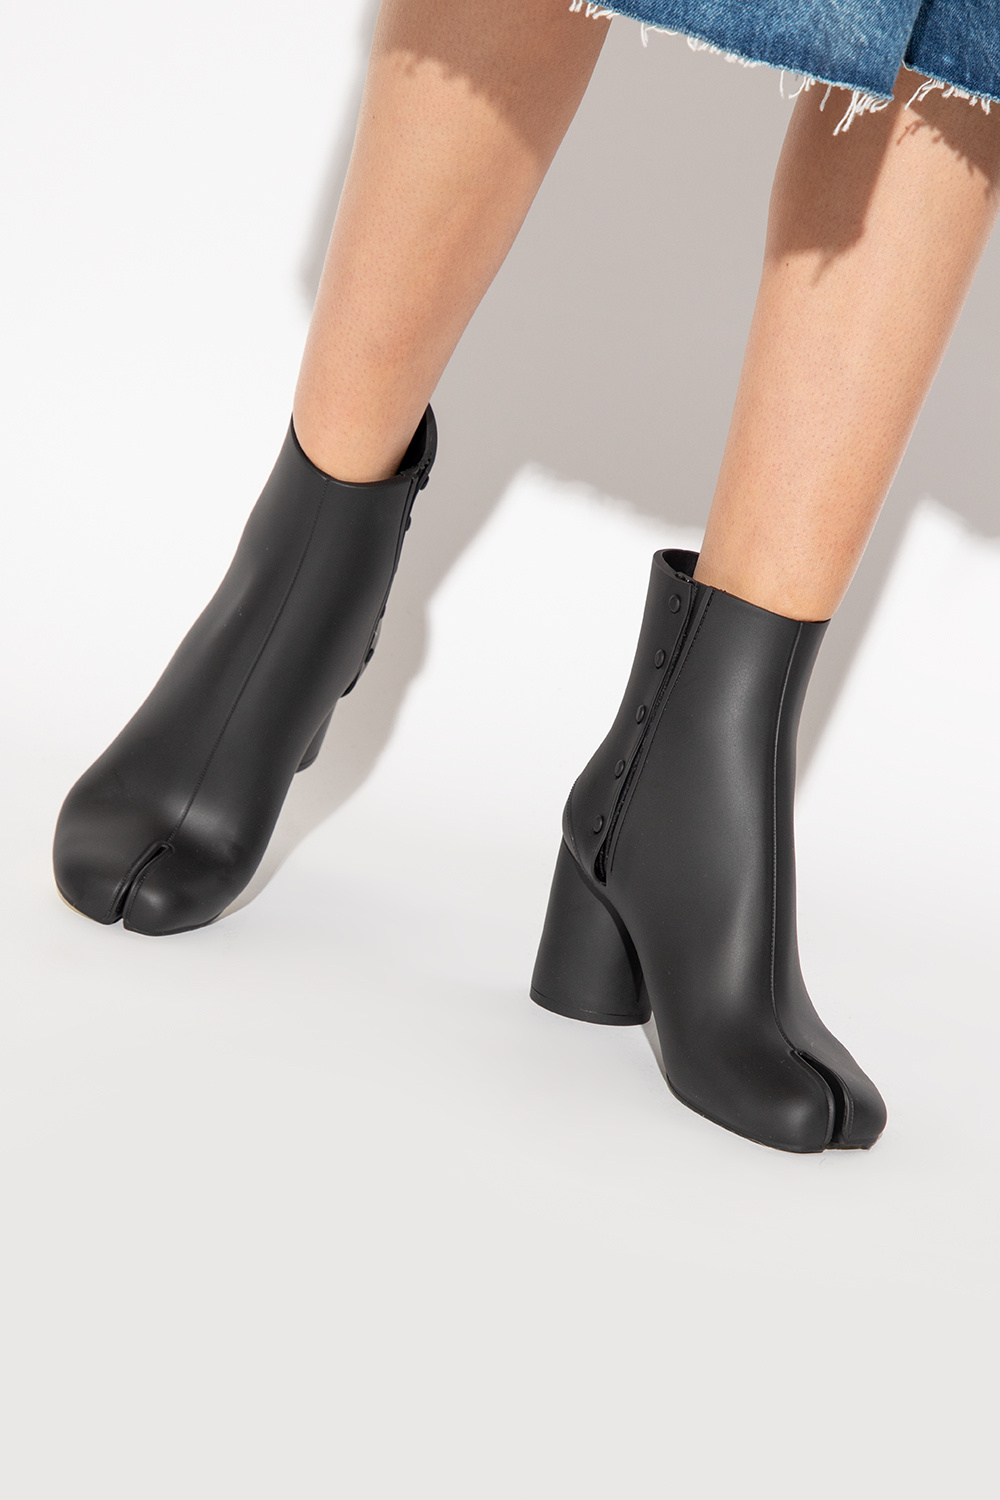 ‘Tabi’ split-toe ankle boots Maison Margiela - Vitkac GB